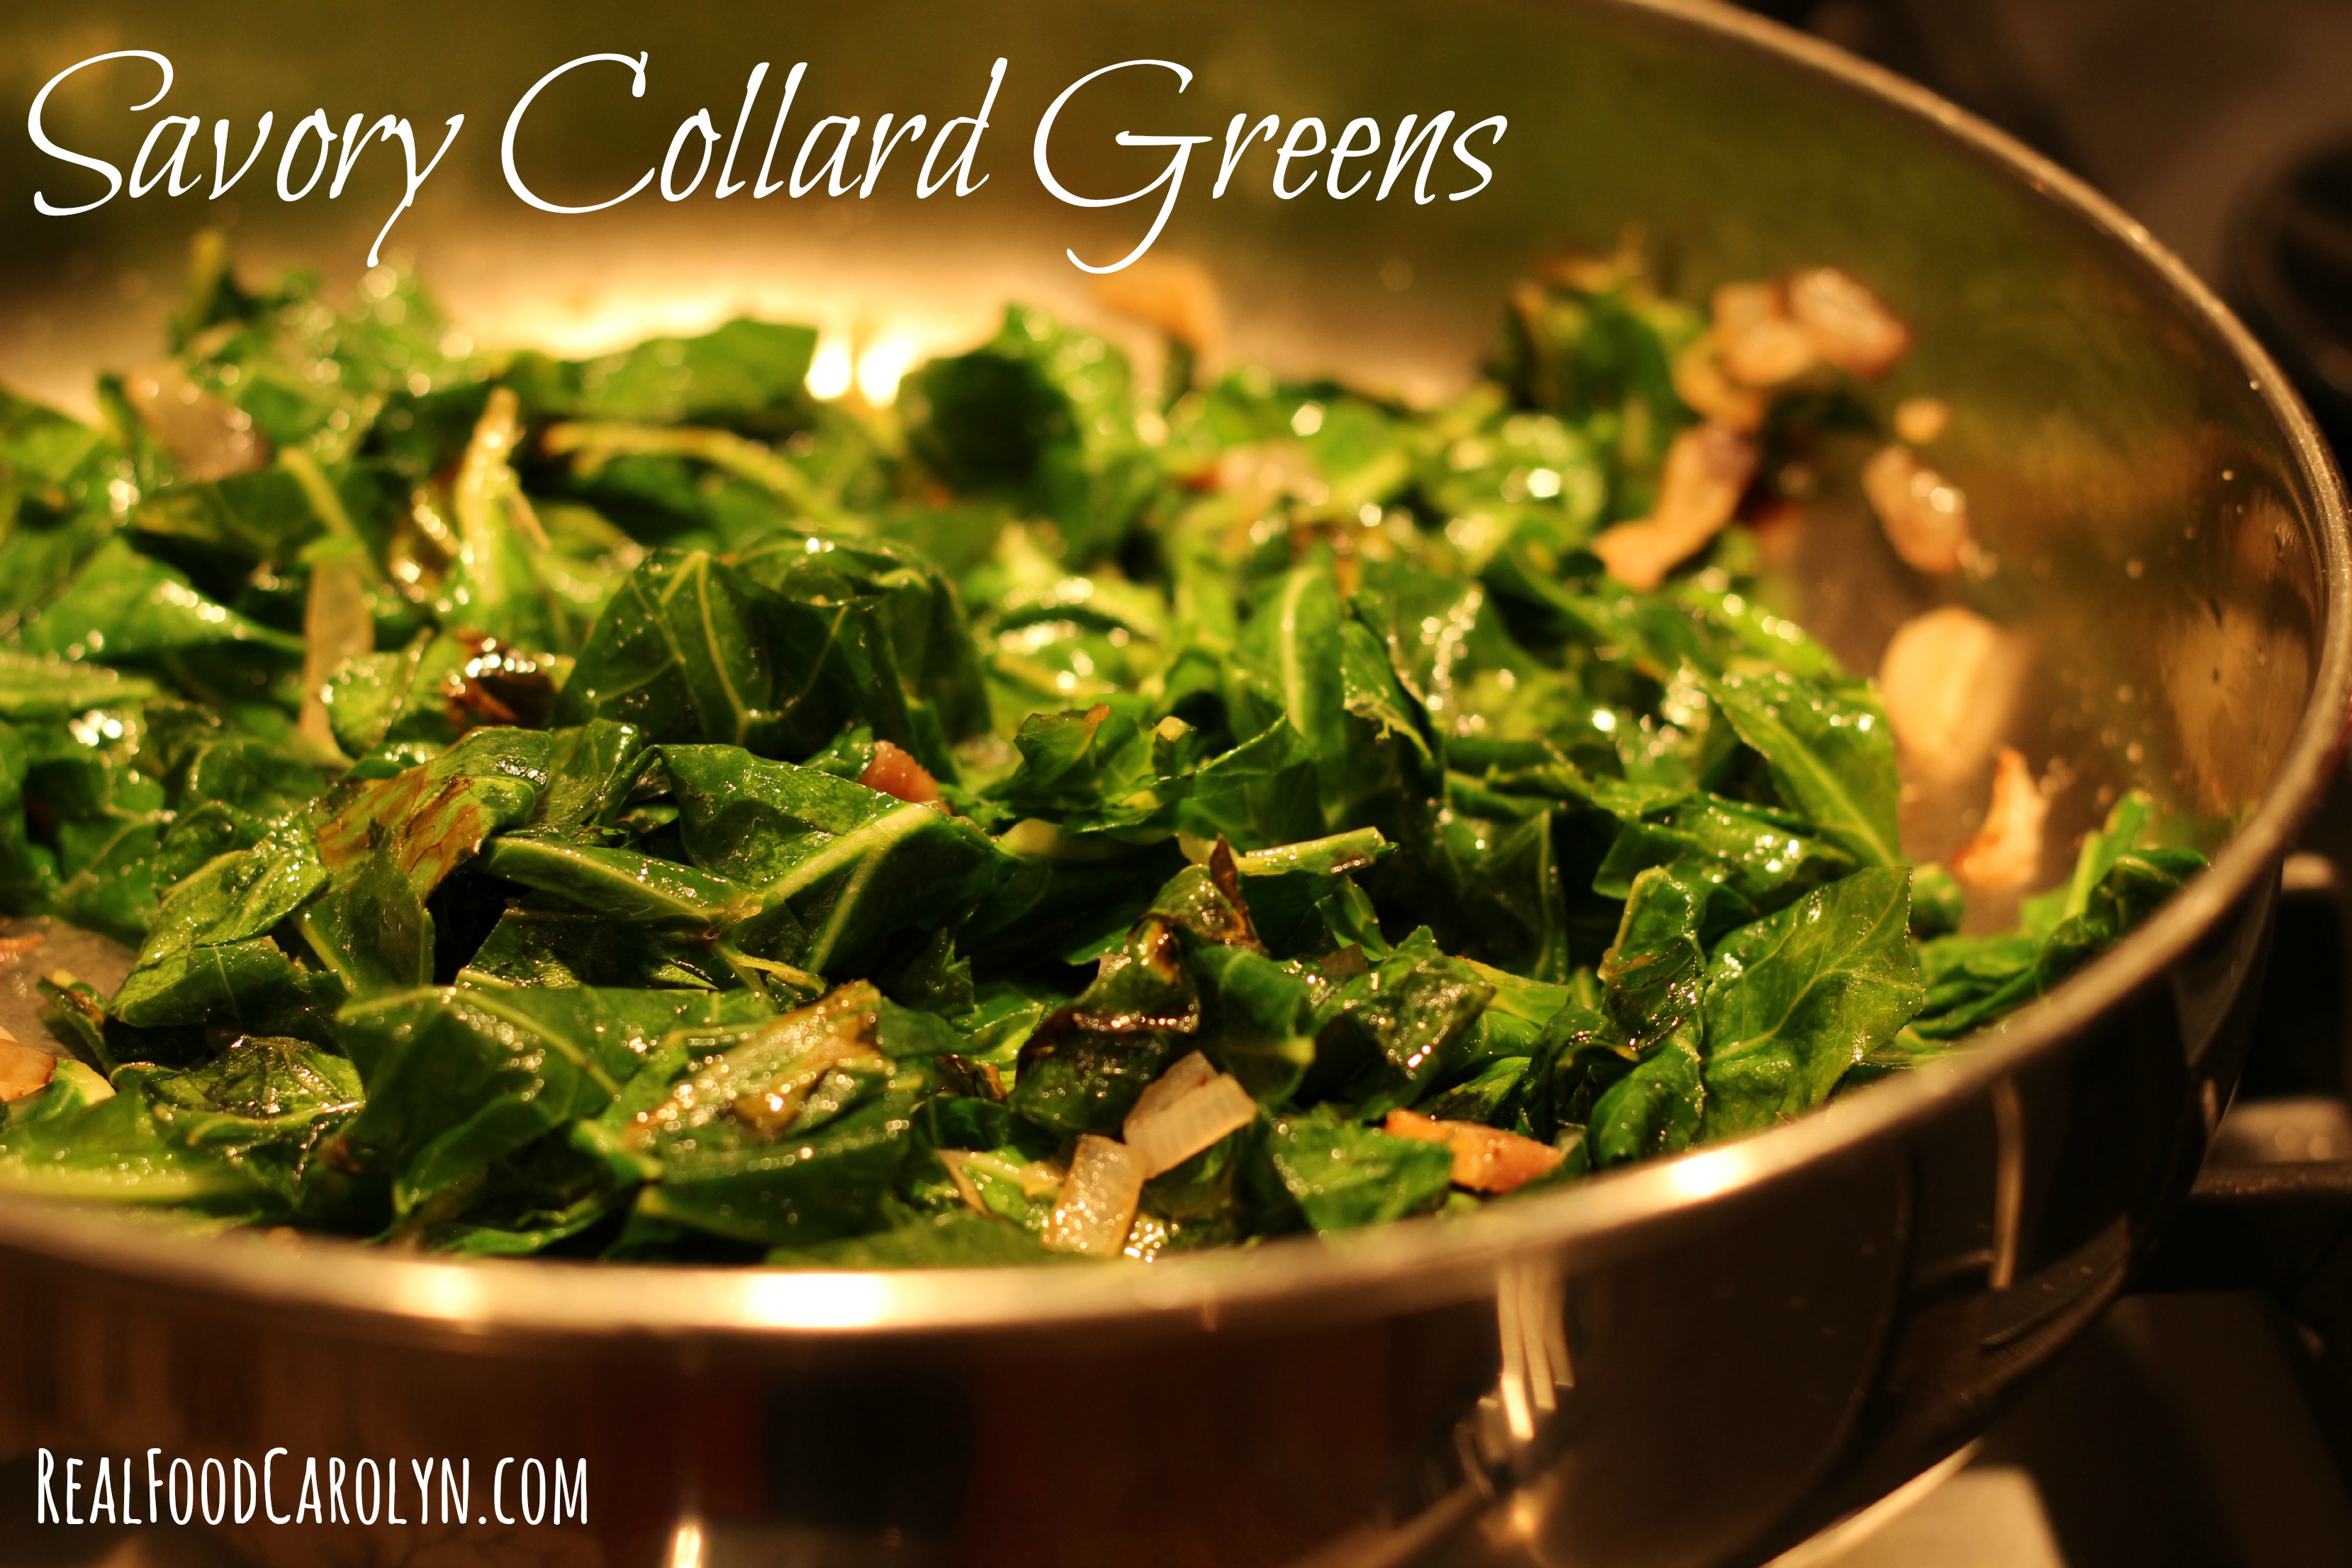 Savory Collard Greens recipe from Real Food Carolyn